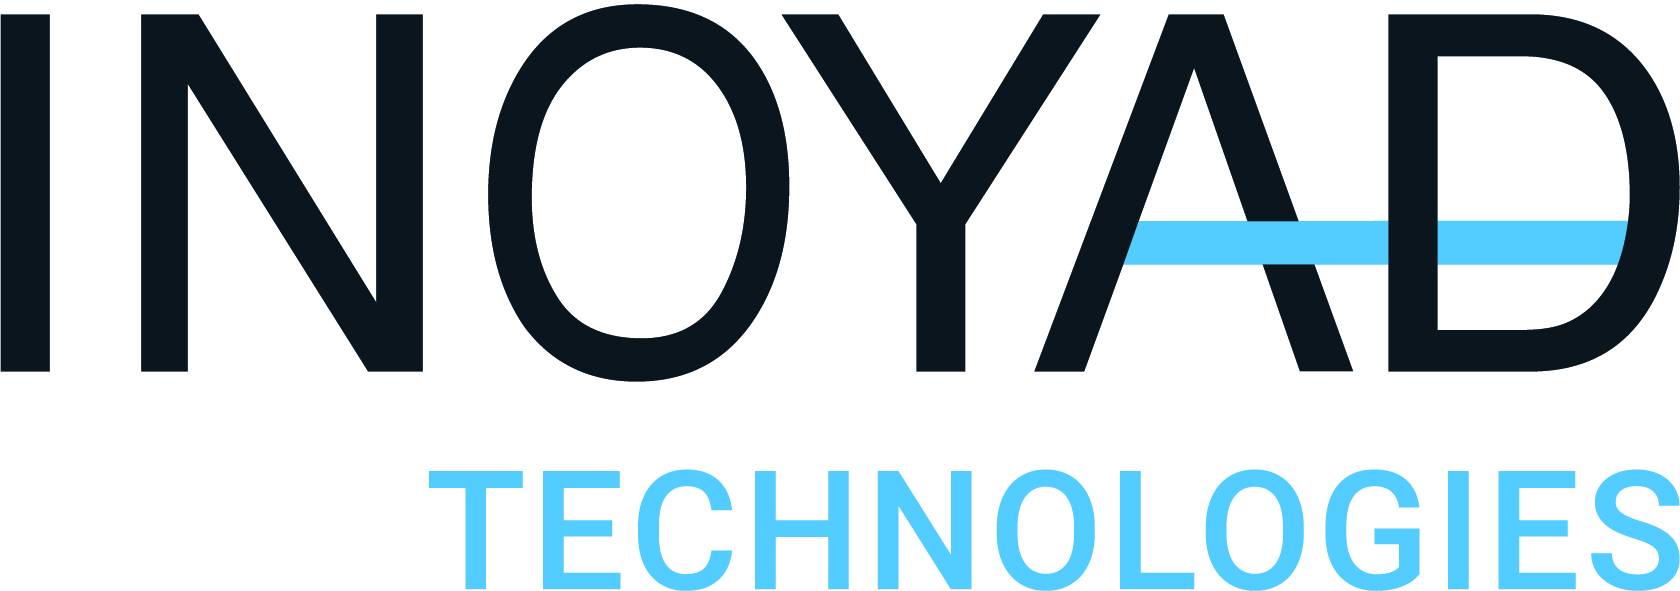 INOYAD Technologies Logo